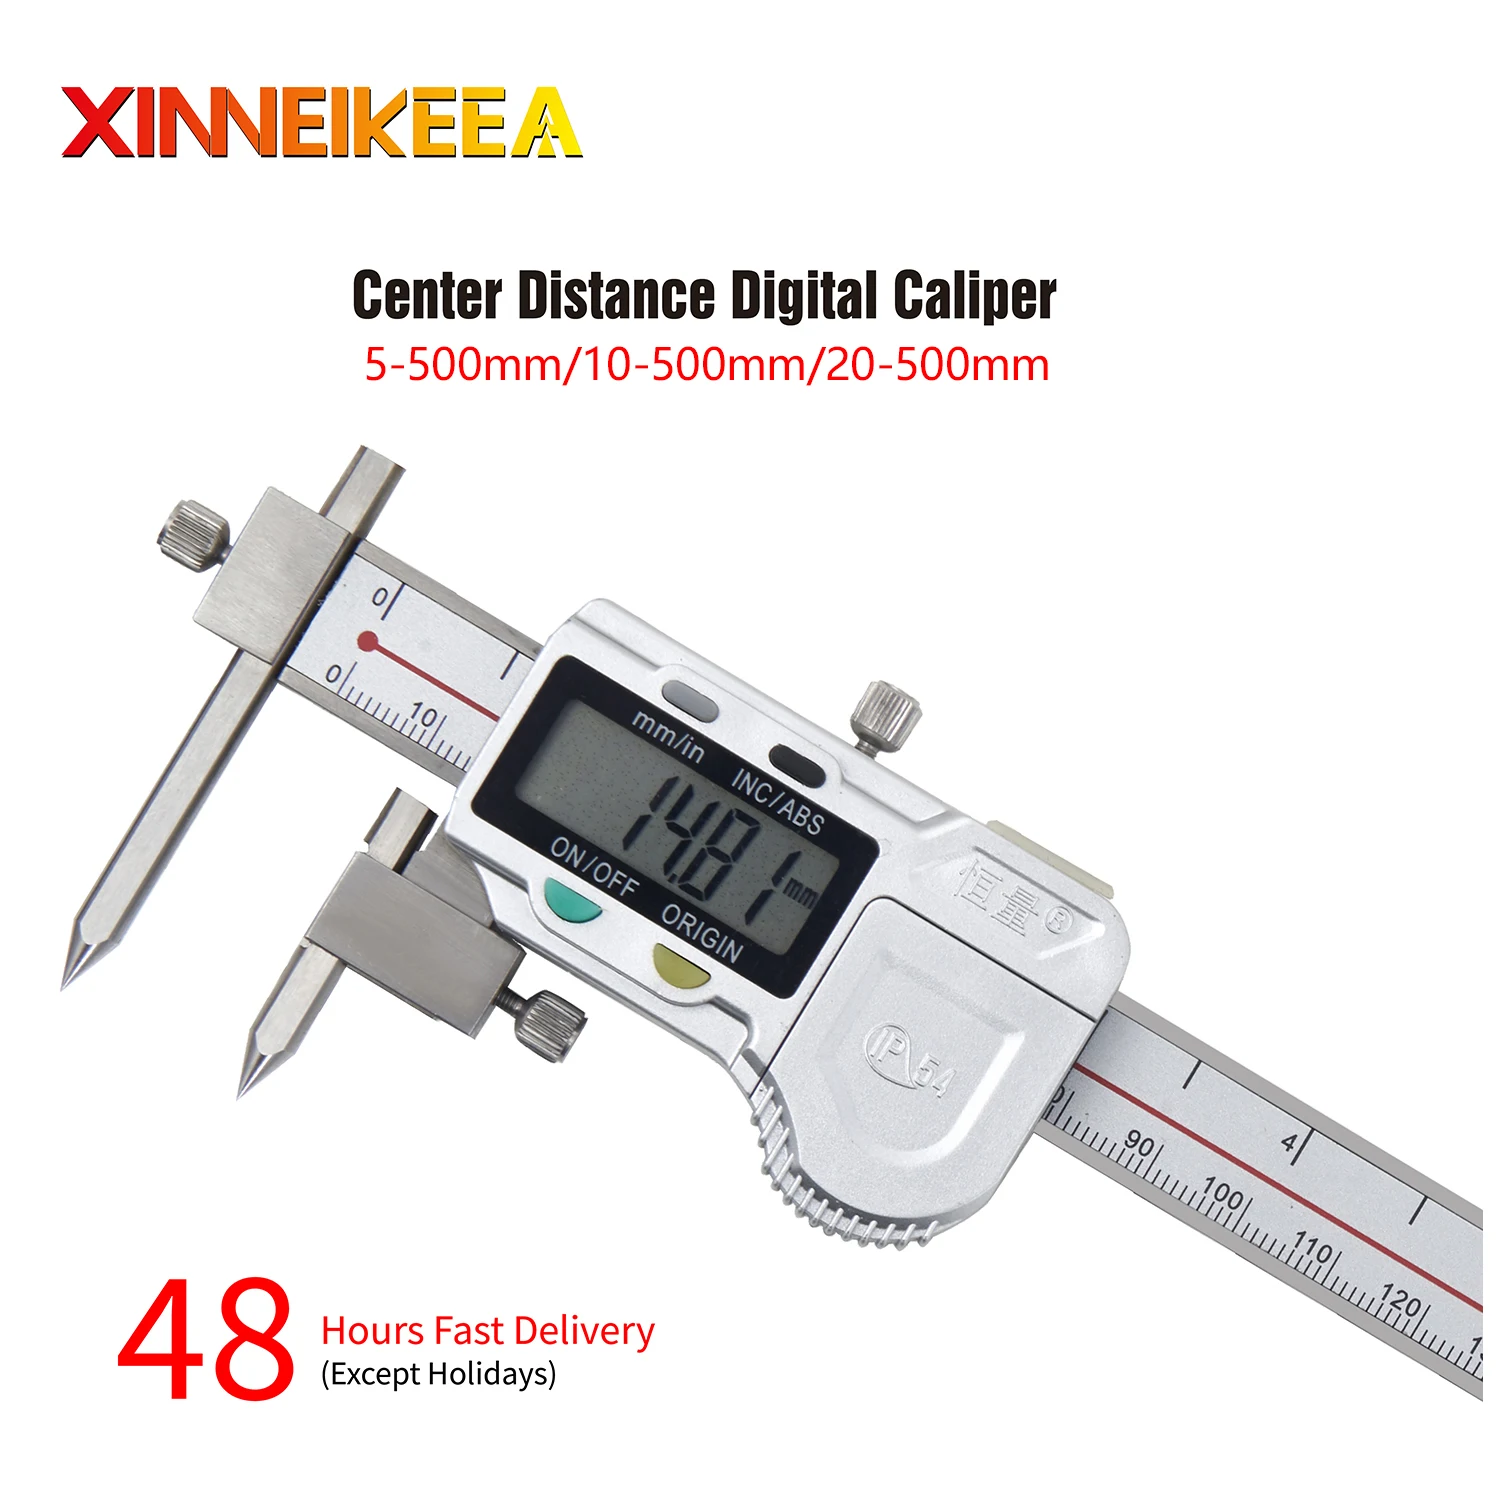 Center Distance Digital Caliper Measuring Range 5-500 10-500 20-500mm Edge To Center Distance Digital Caliper  Measuring Tools